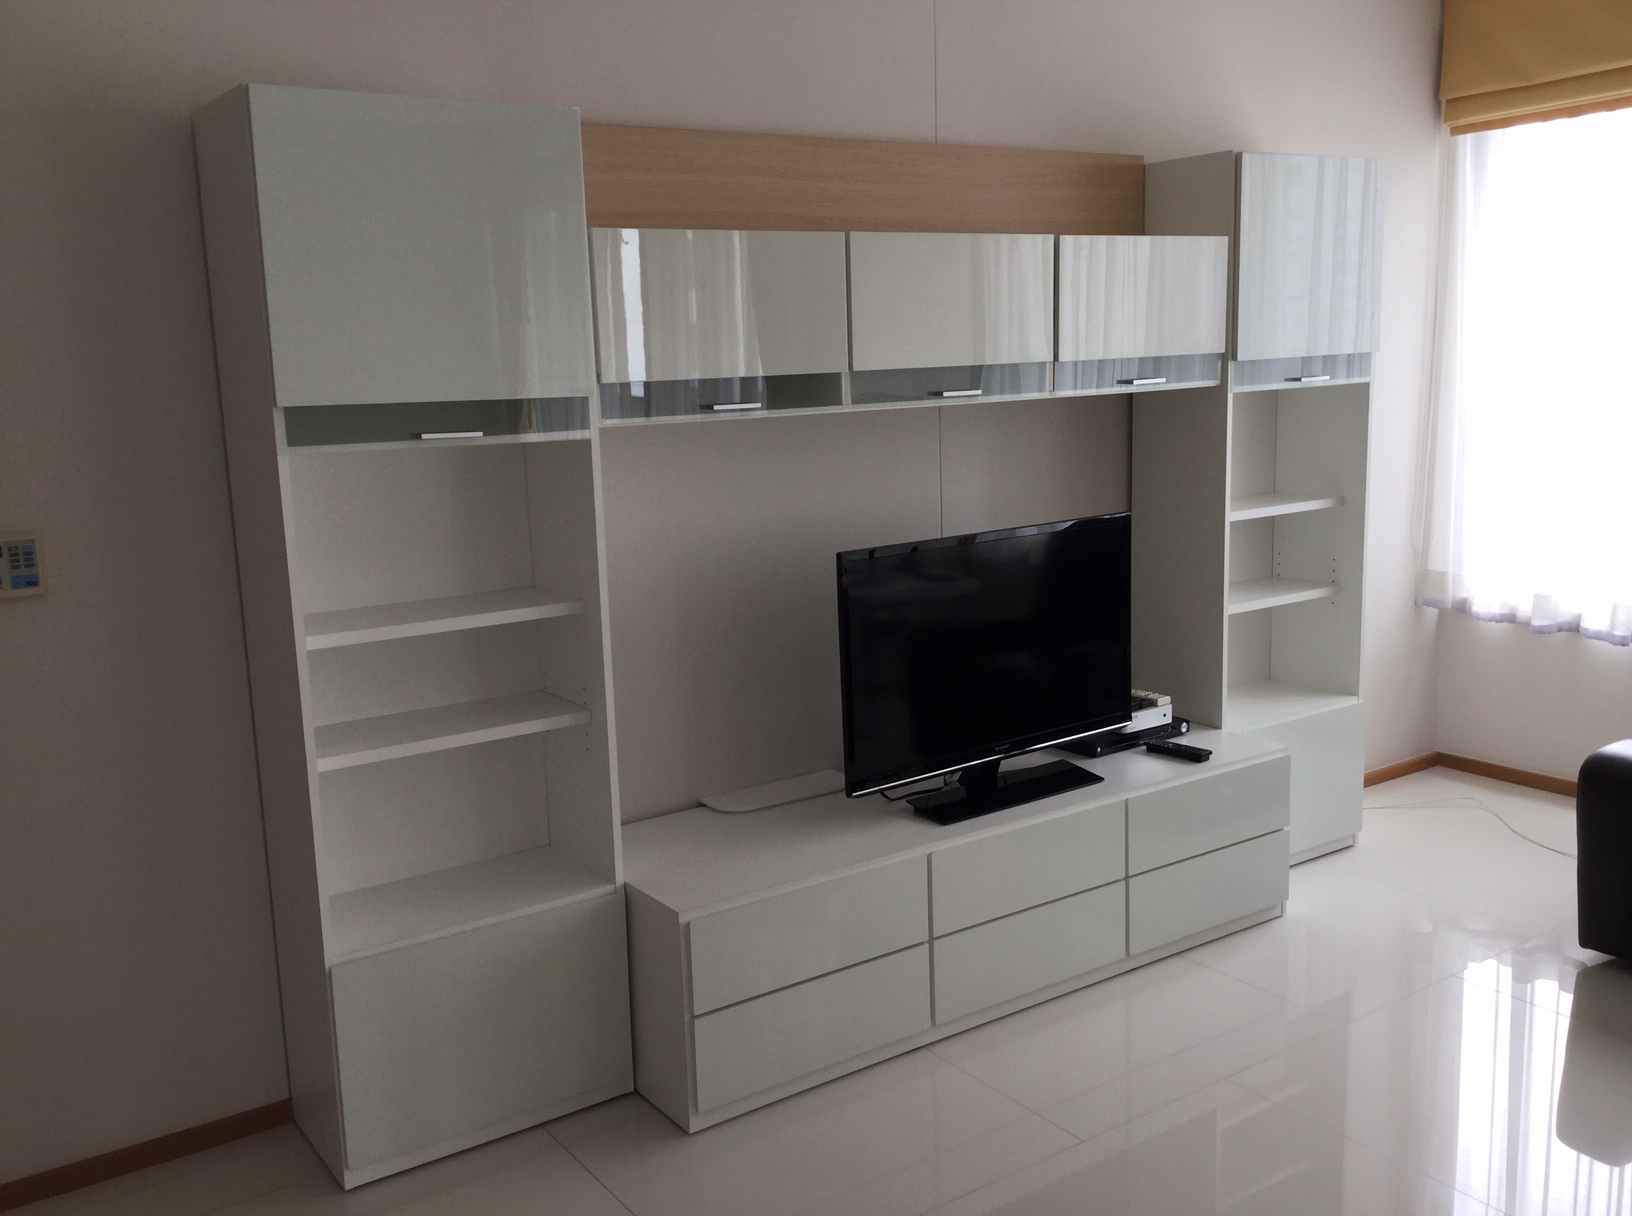 Large 2-bedroom condo for rent - Sukhumvit 24 - Emporio Place